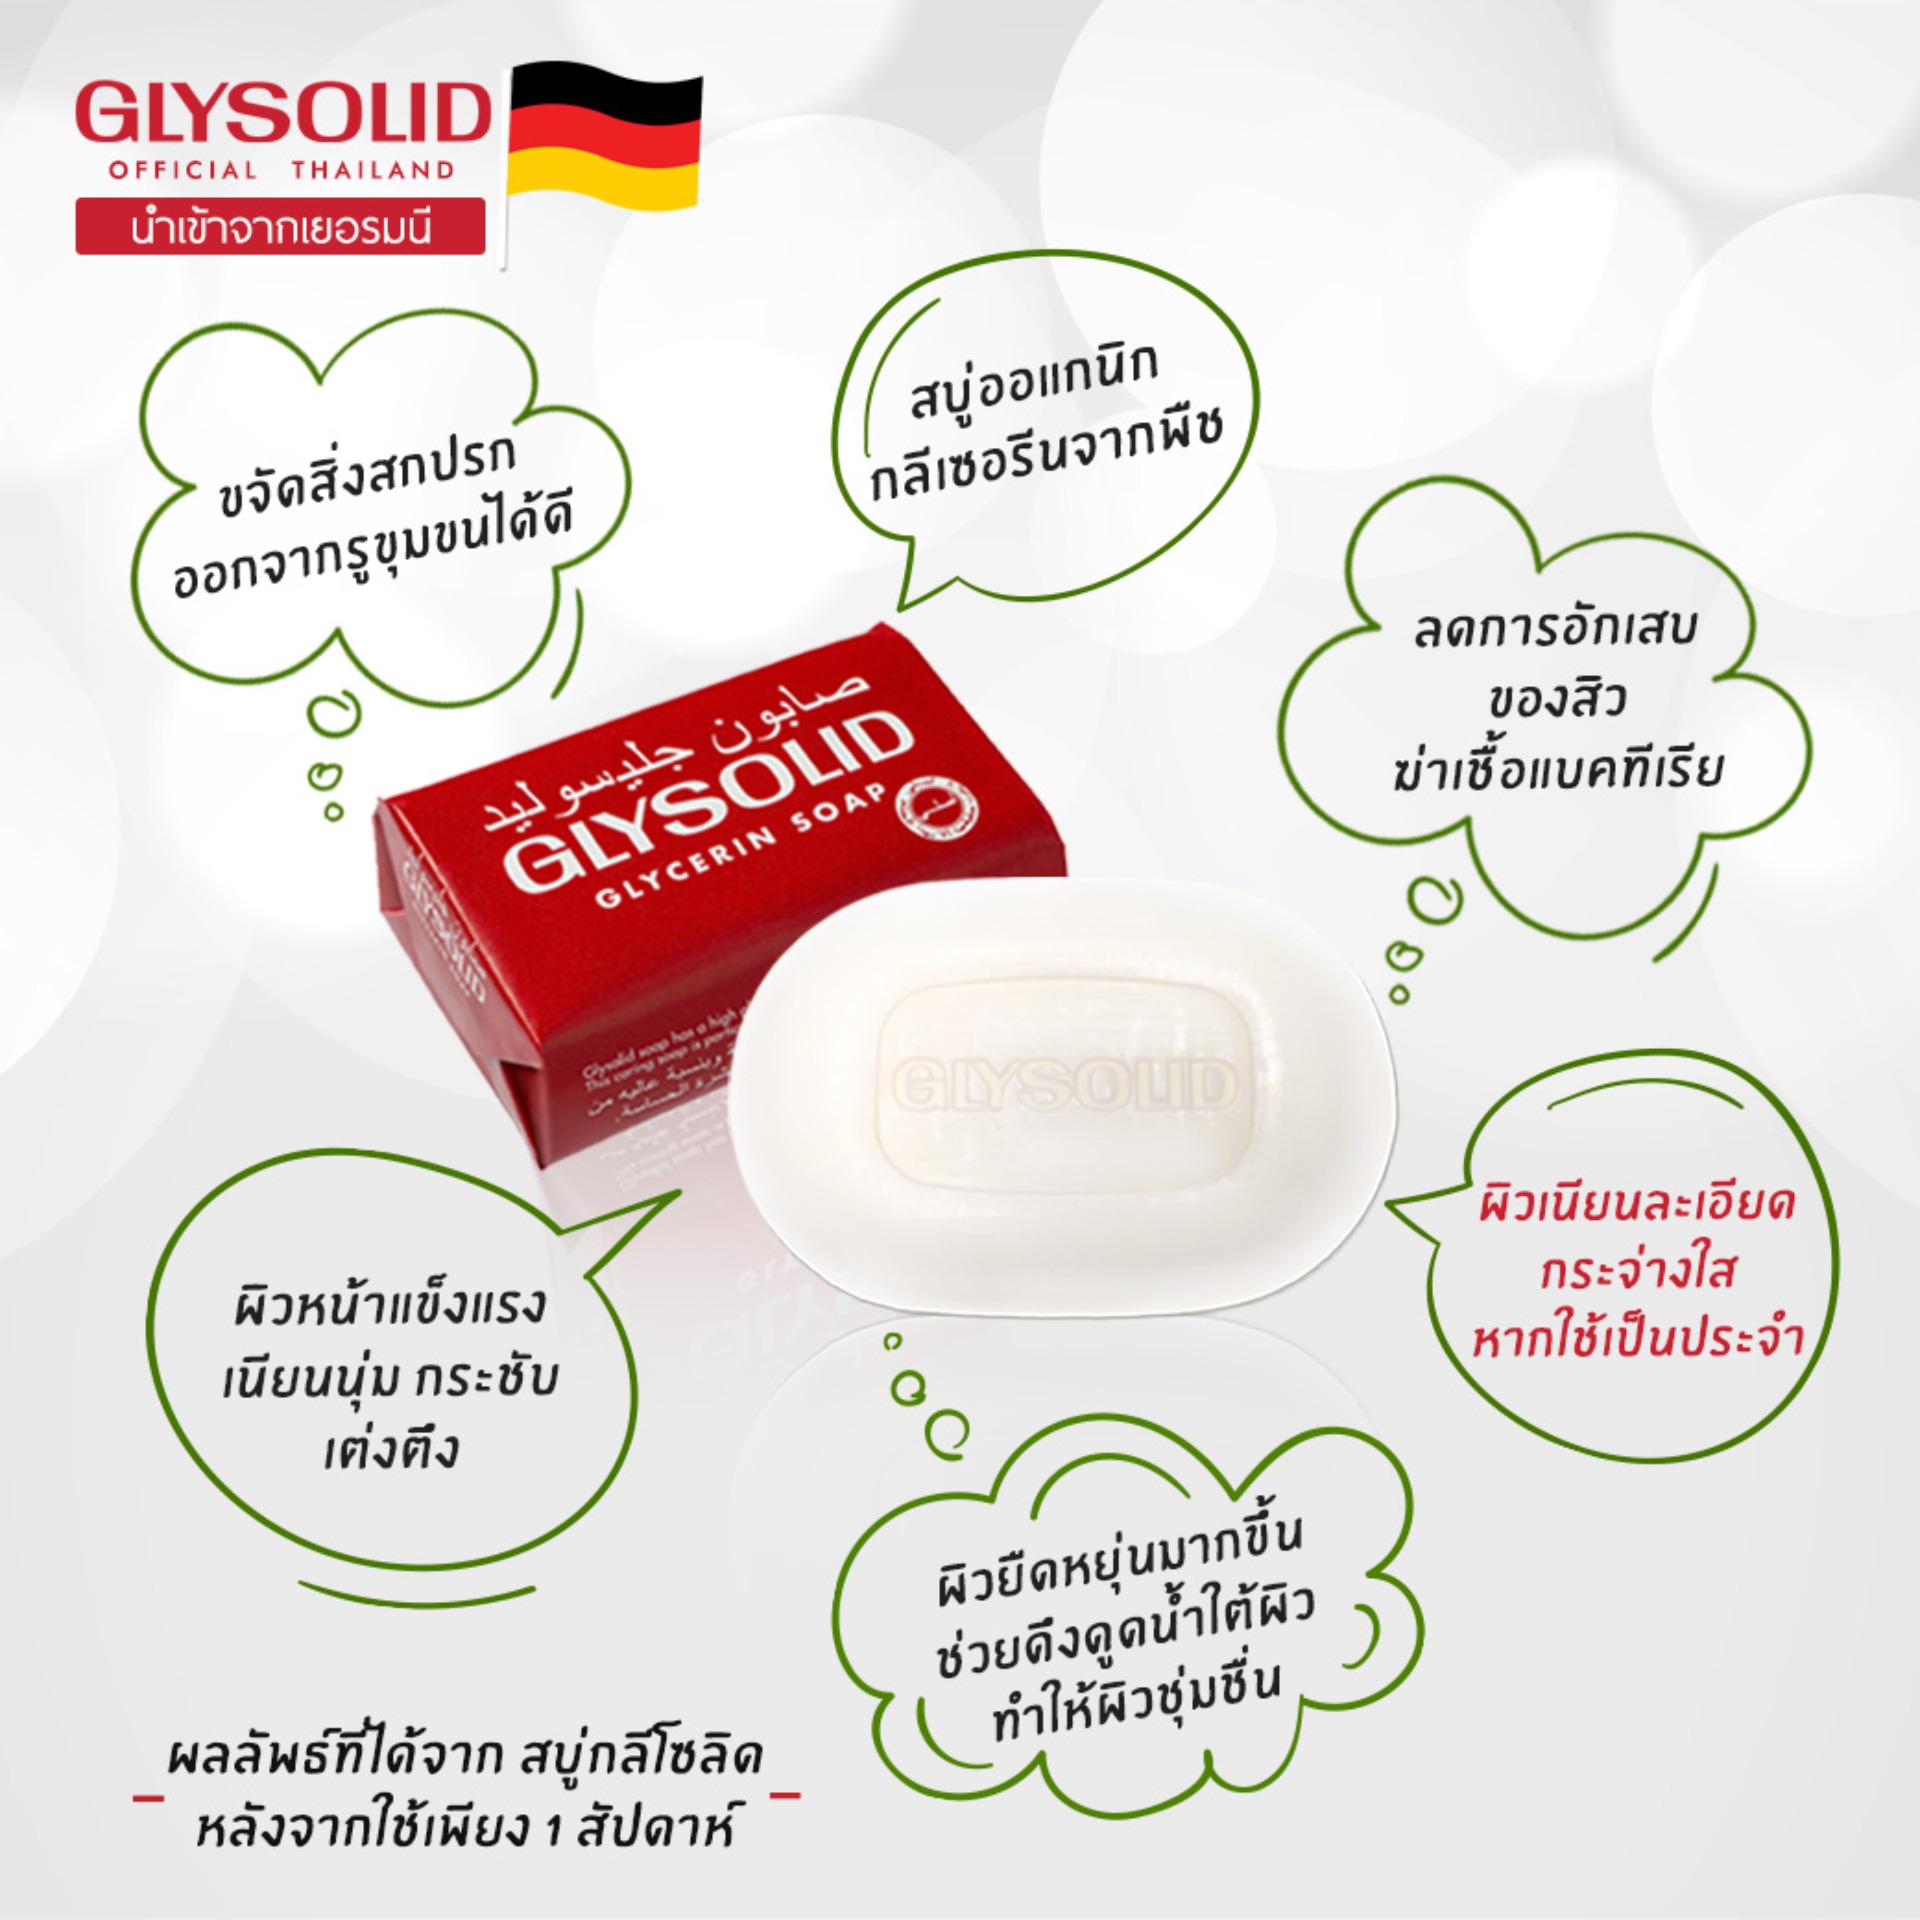 Glysolid Glycerin Soap ซื้อ 2 แถม 1 (สบู่กลีเซอรีนเข้มข้นจากพืช ผิวแห้ง  บอบบาง แพ้ง่าย เป็นสิว) | Lazada.co.th